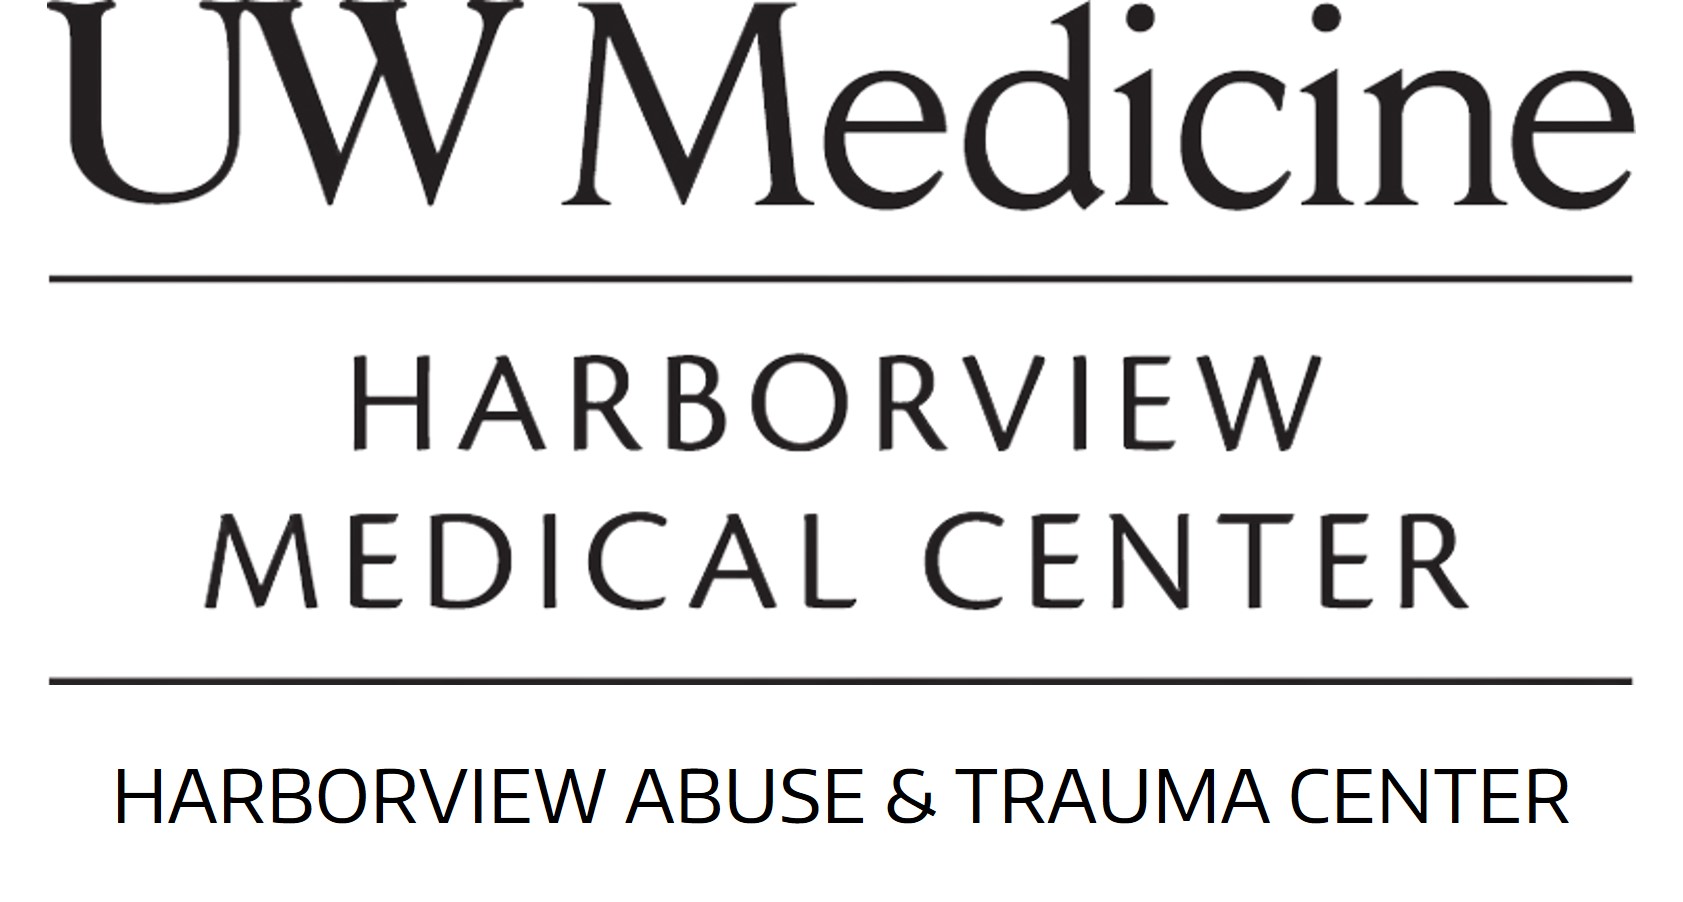 UW Medicine Harborview Medical Center Harborview Abuse & Trauma Center